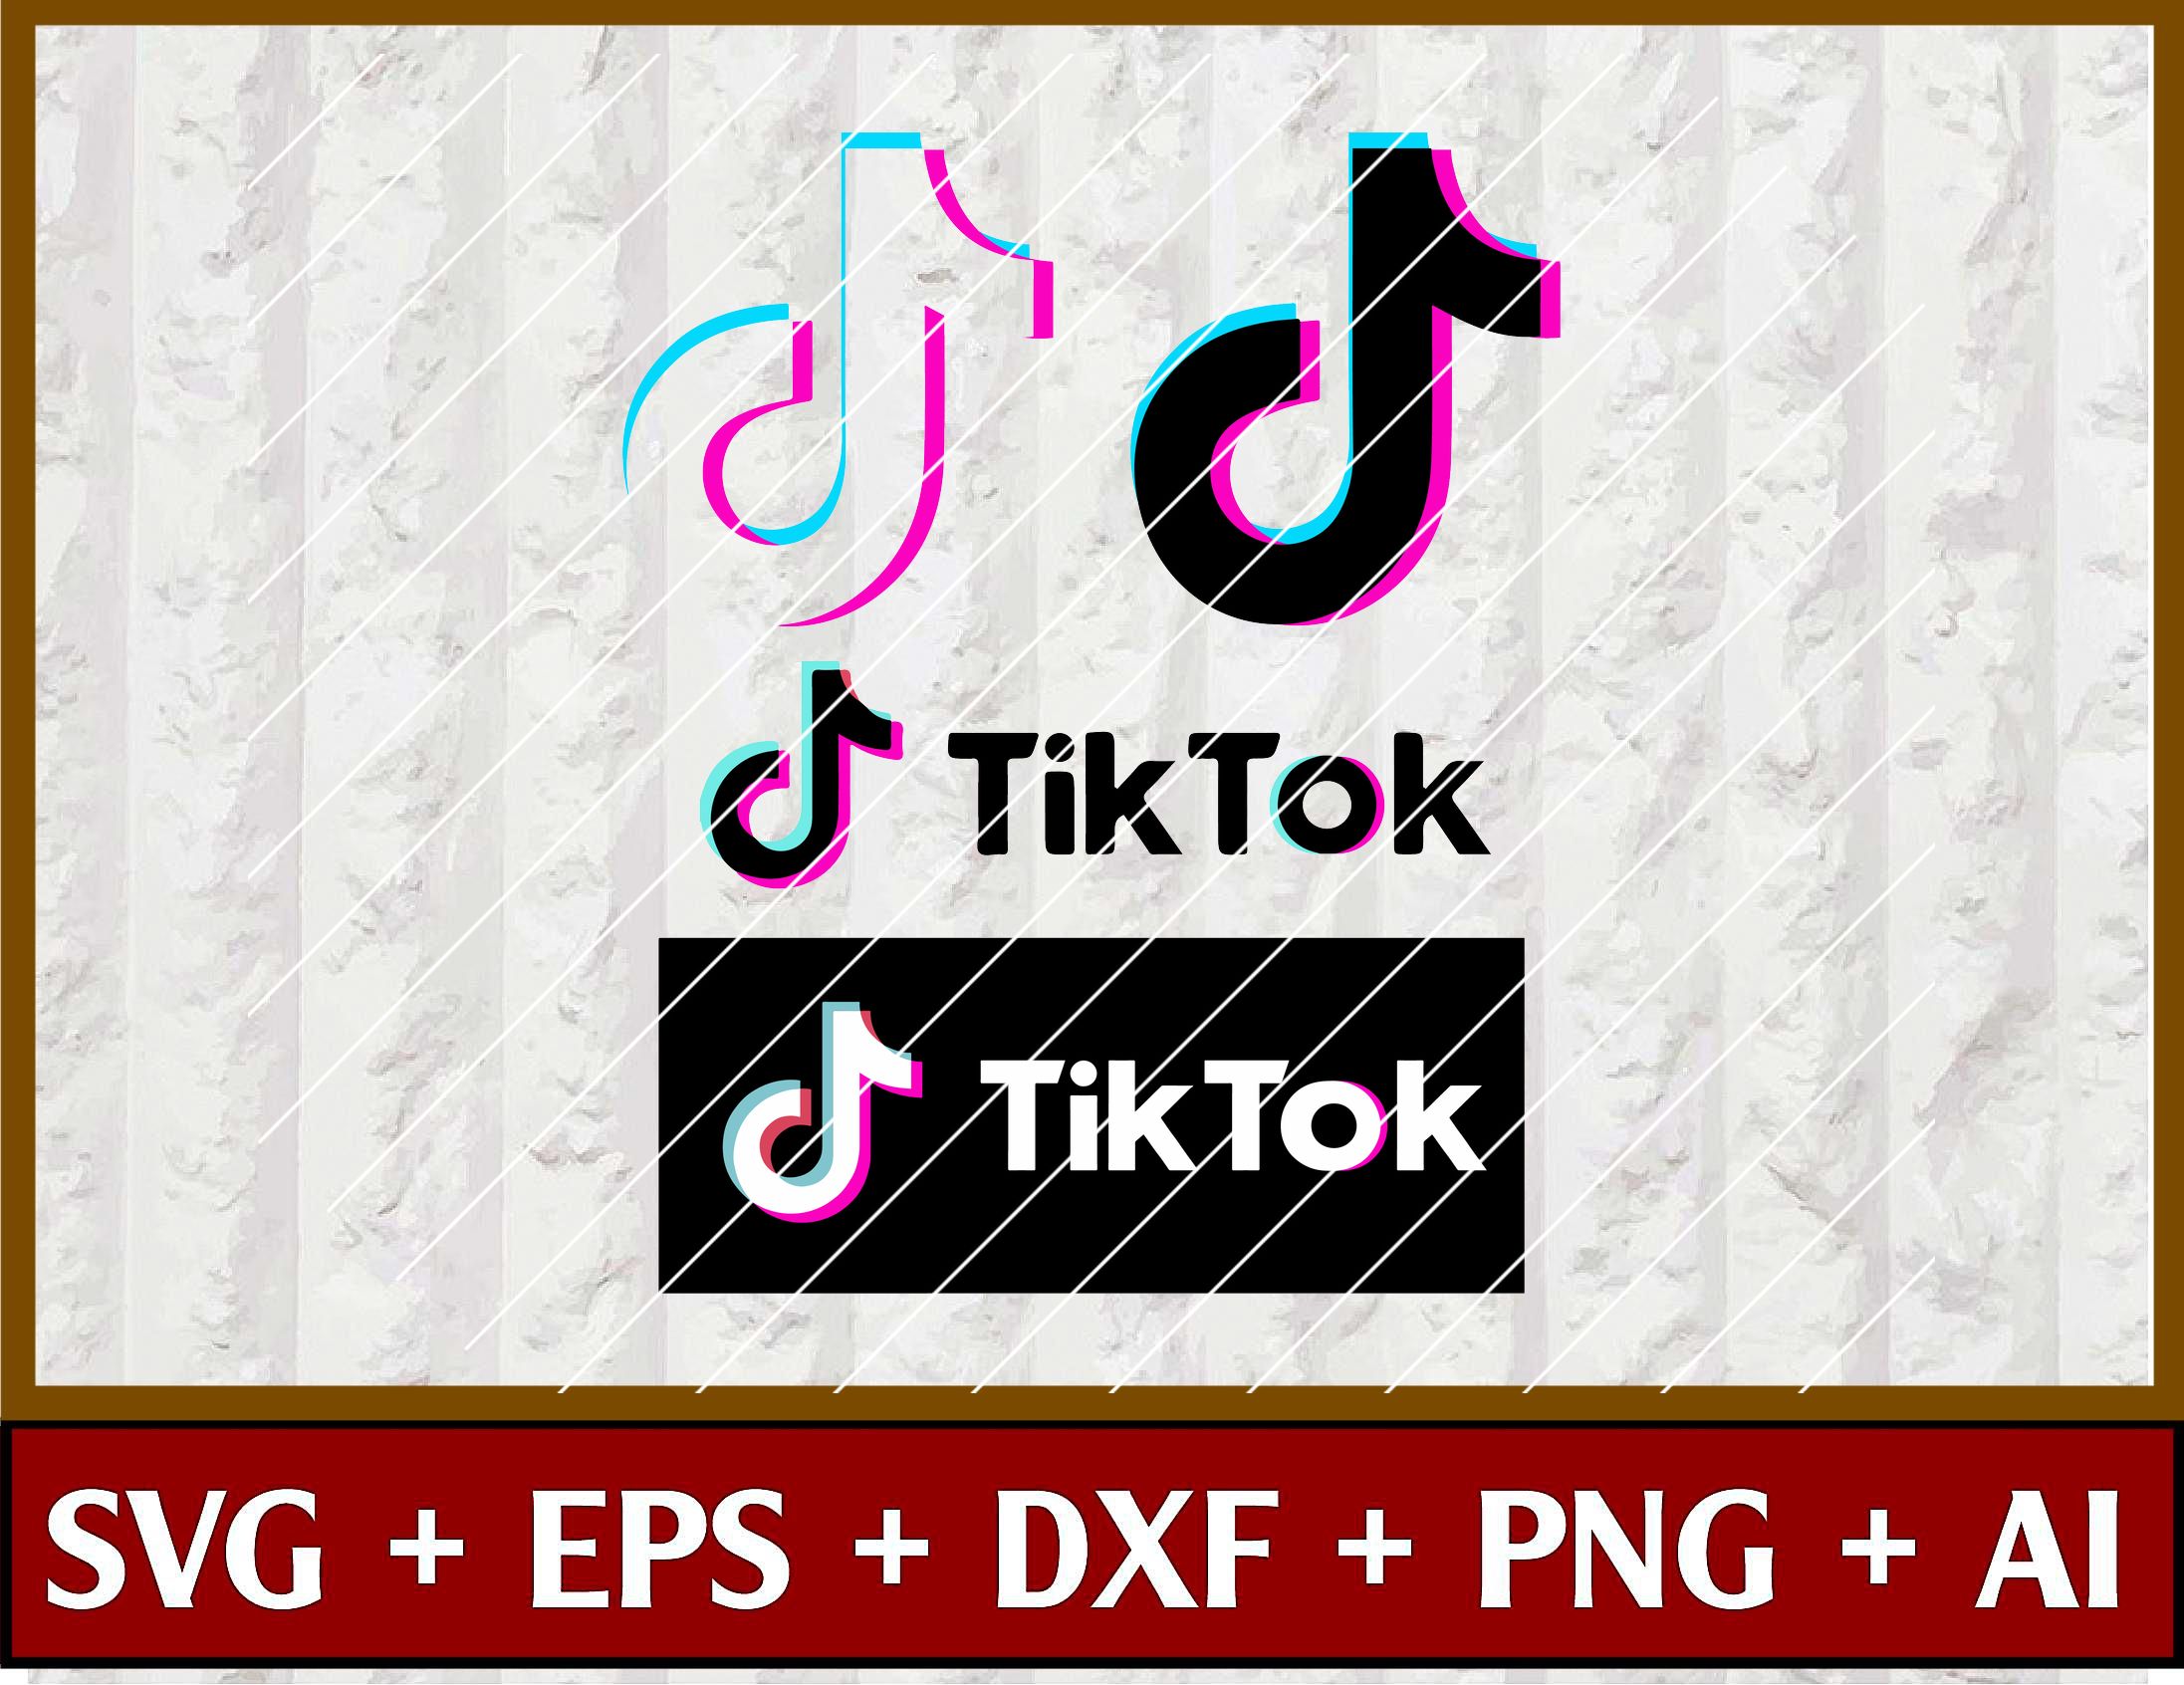 Download TikTok Logo Pack, Vector Tik Tok, TicTok svg Icons, TikTok ...